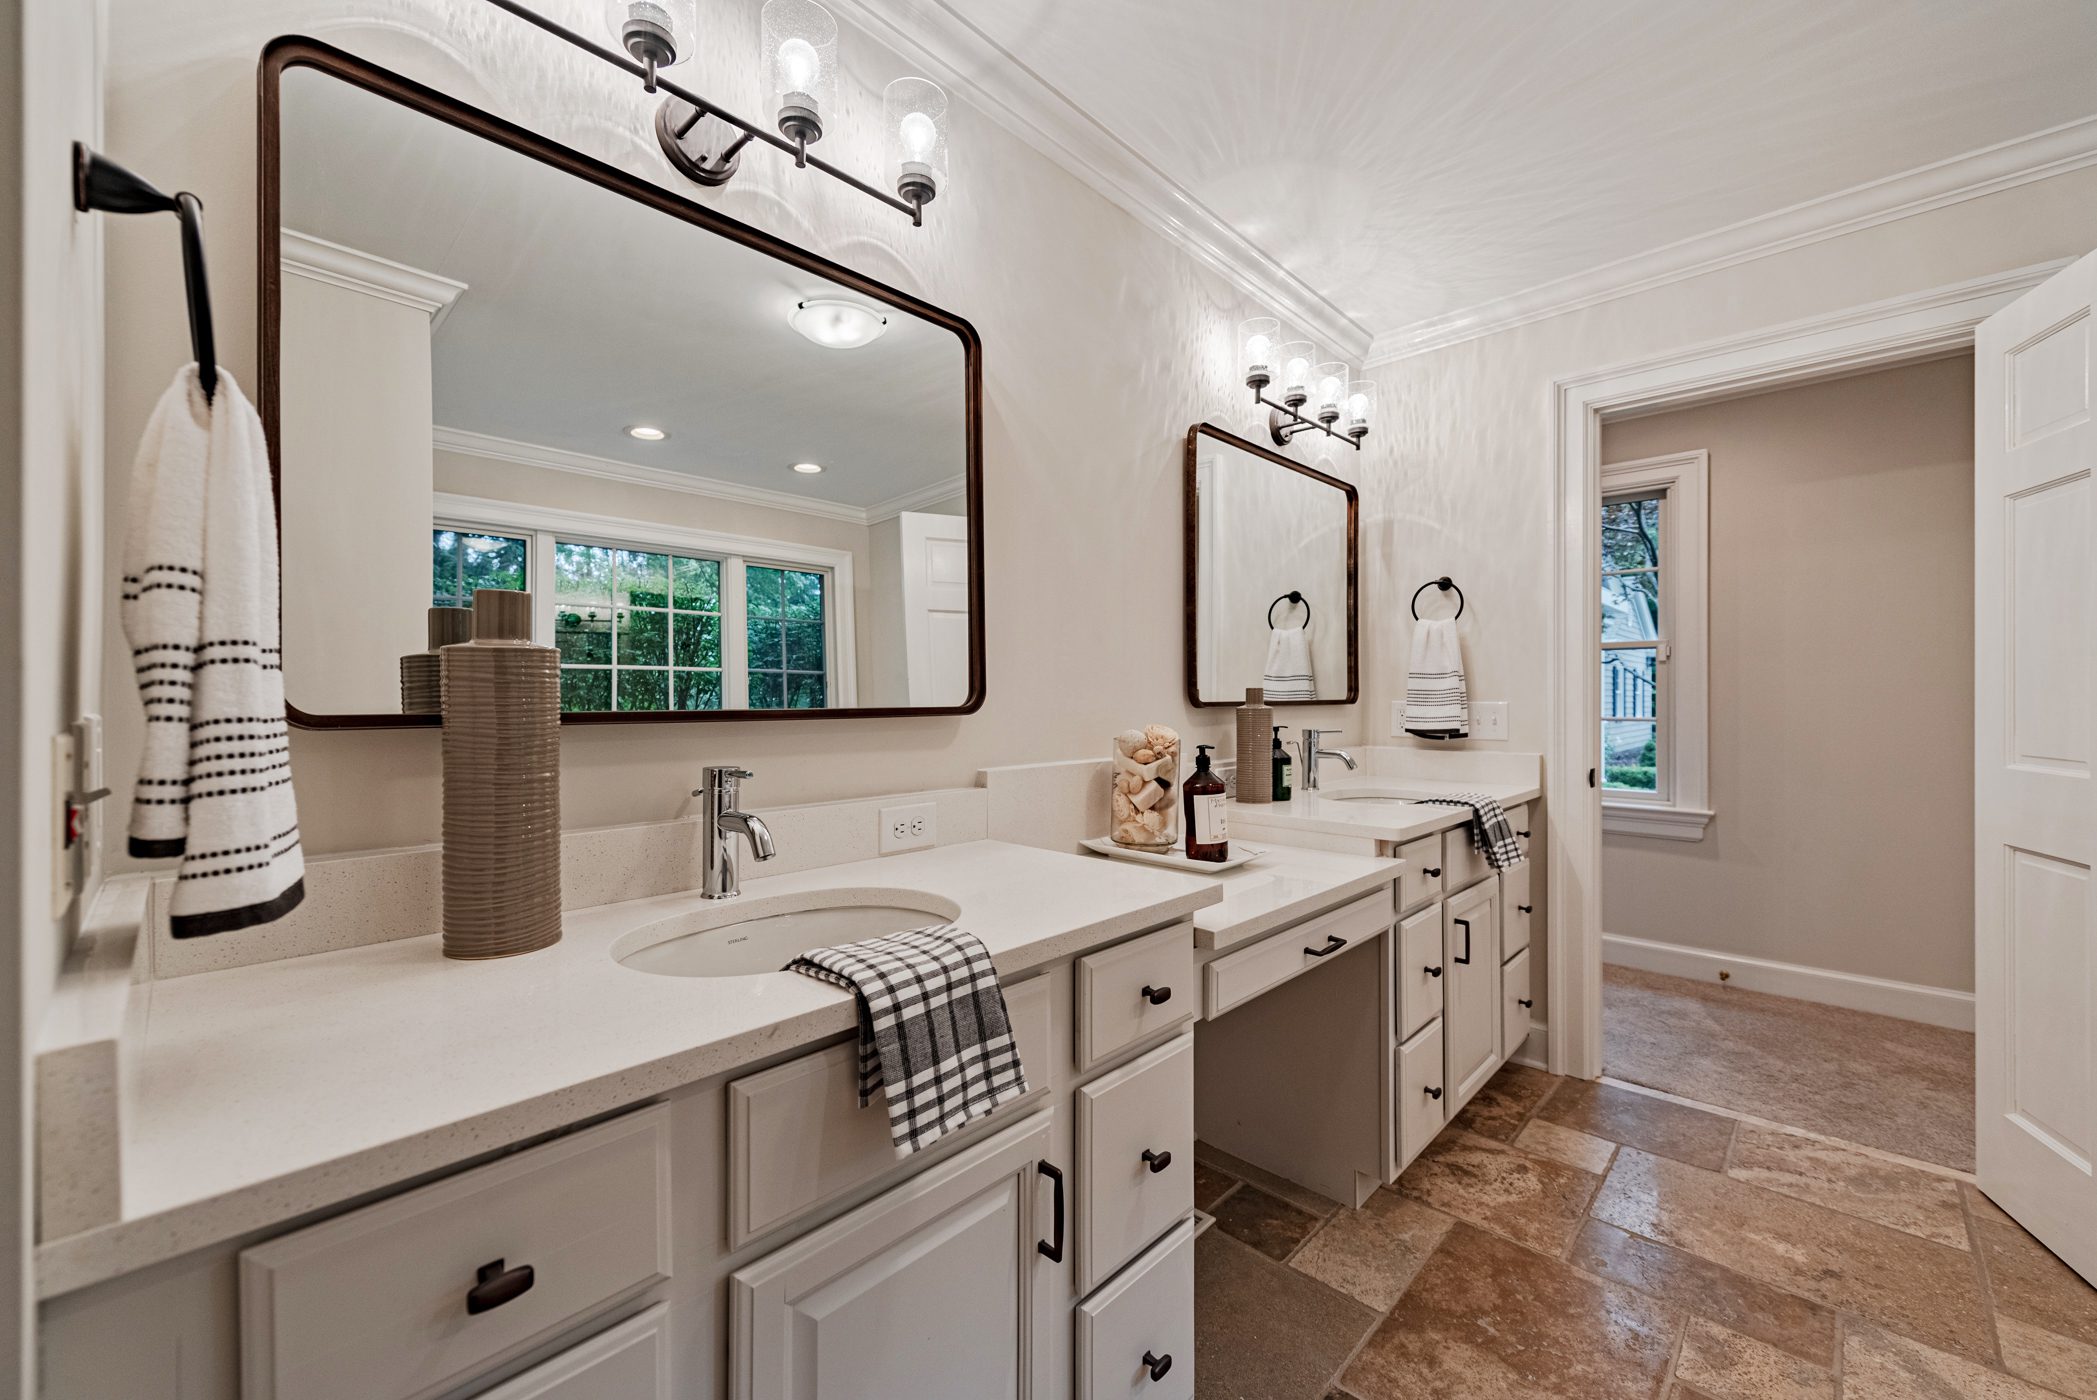 Bathroom renovation to increase home value